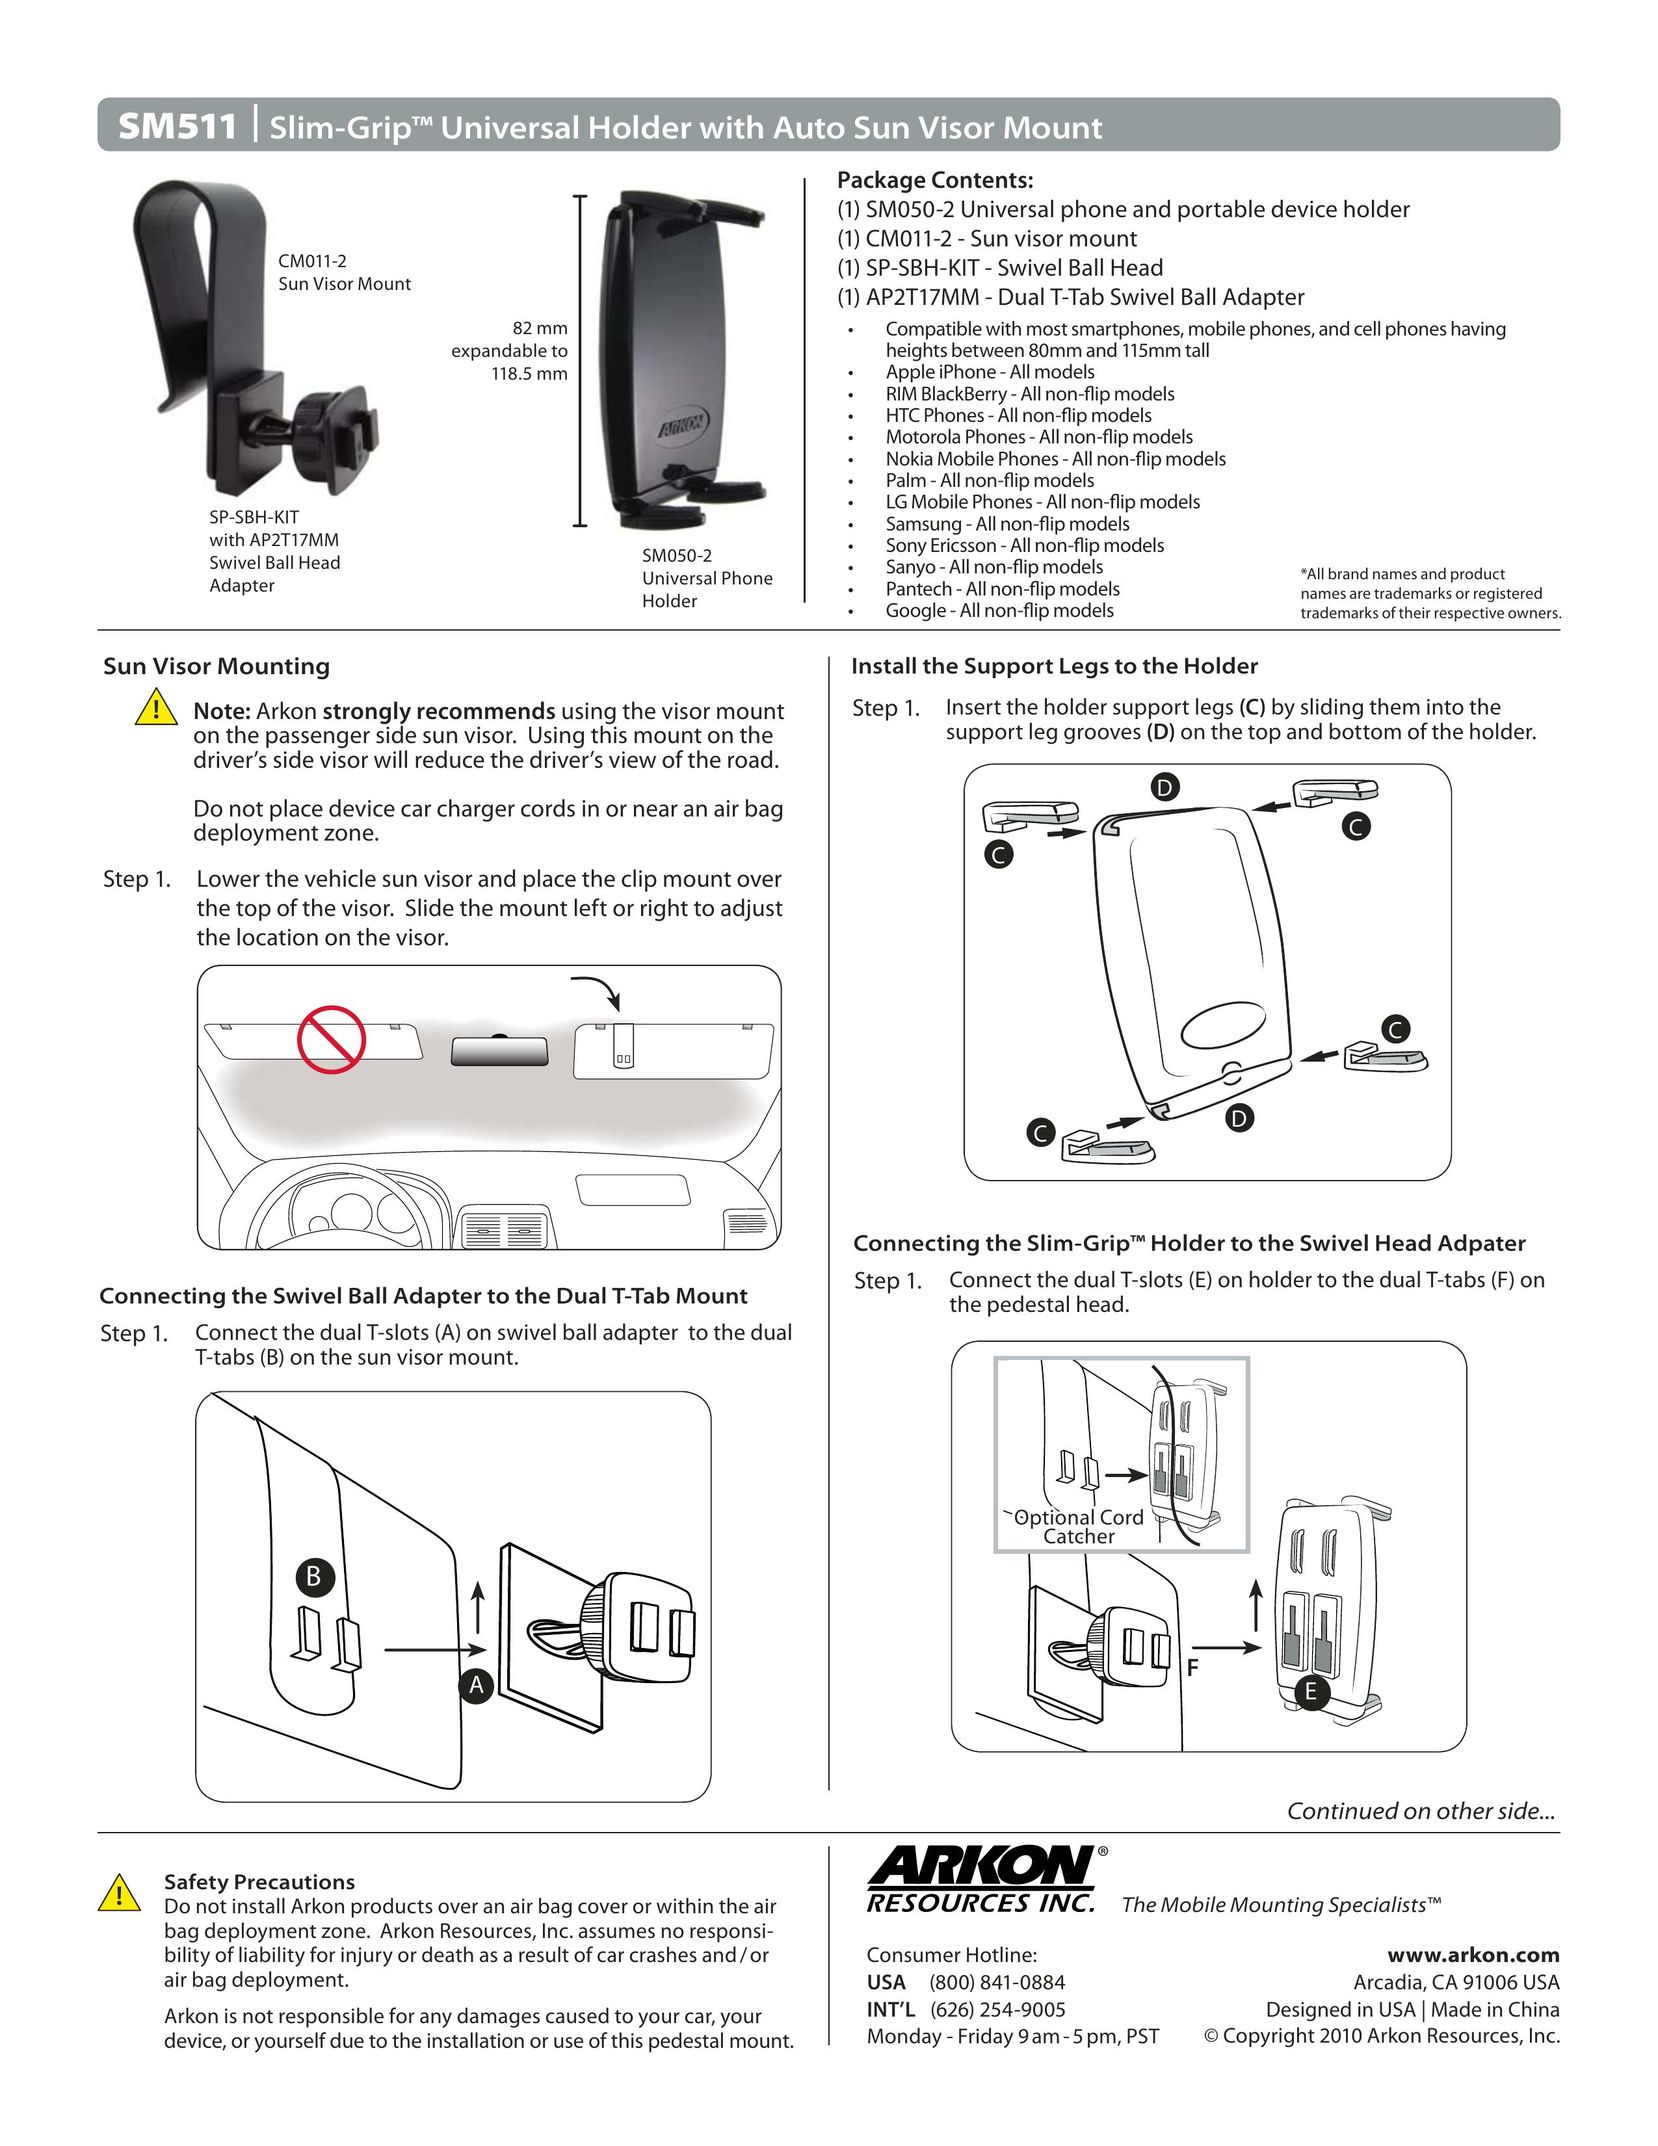 Avaya SM511 Bicycle Accessories User Manual